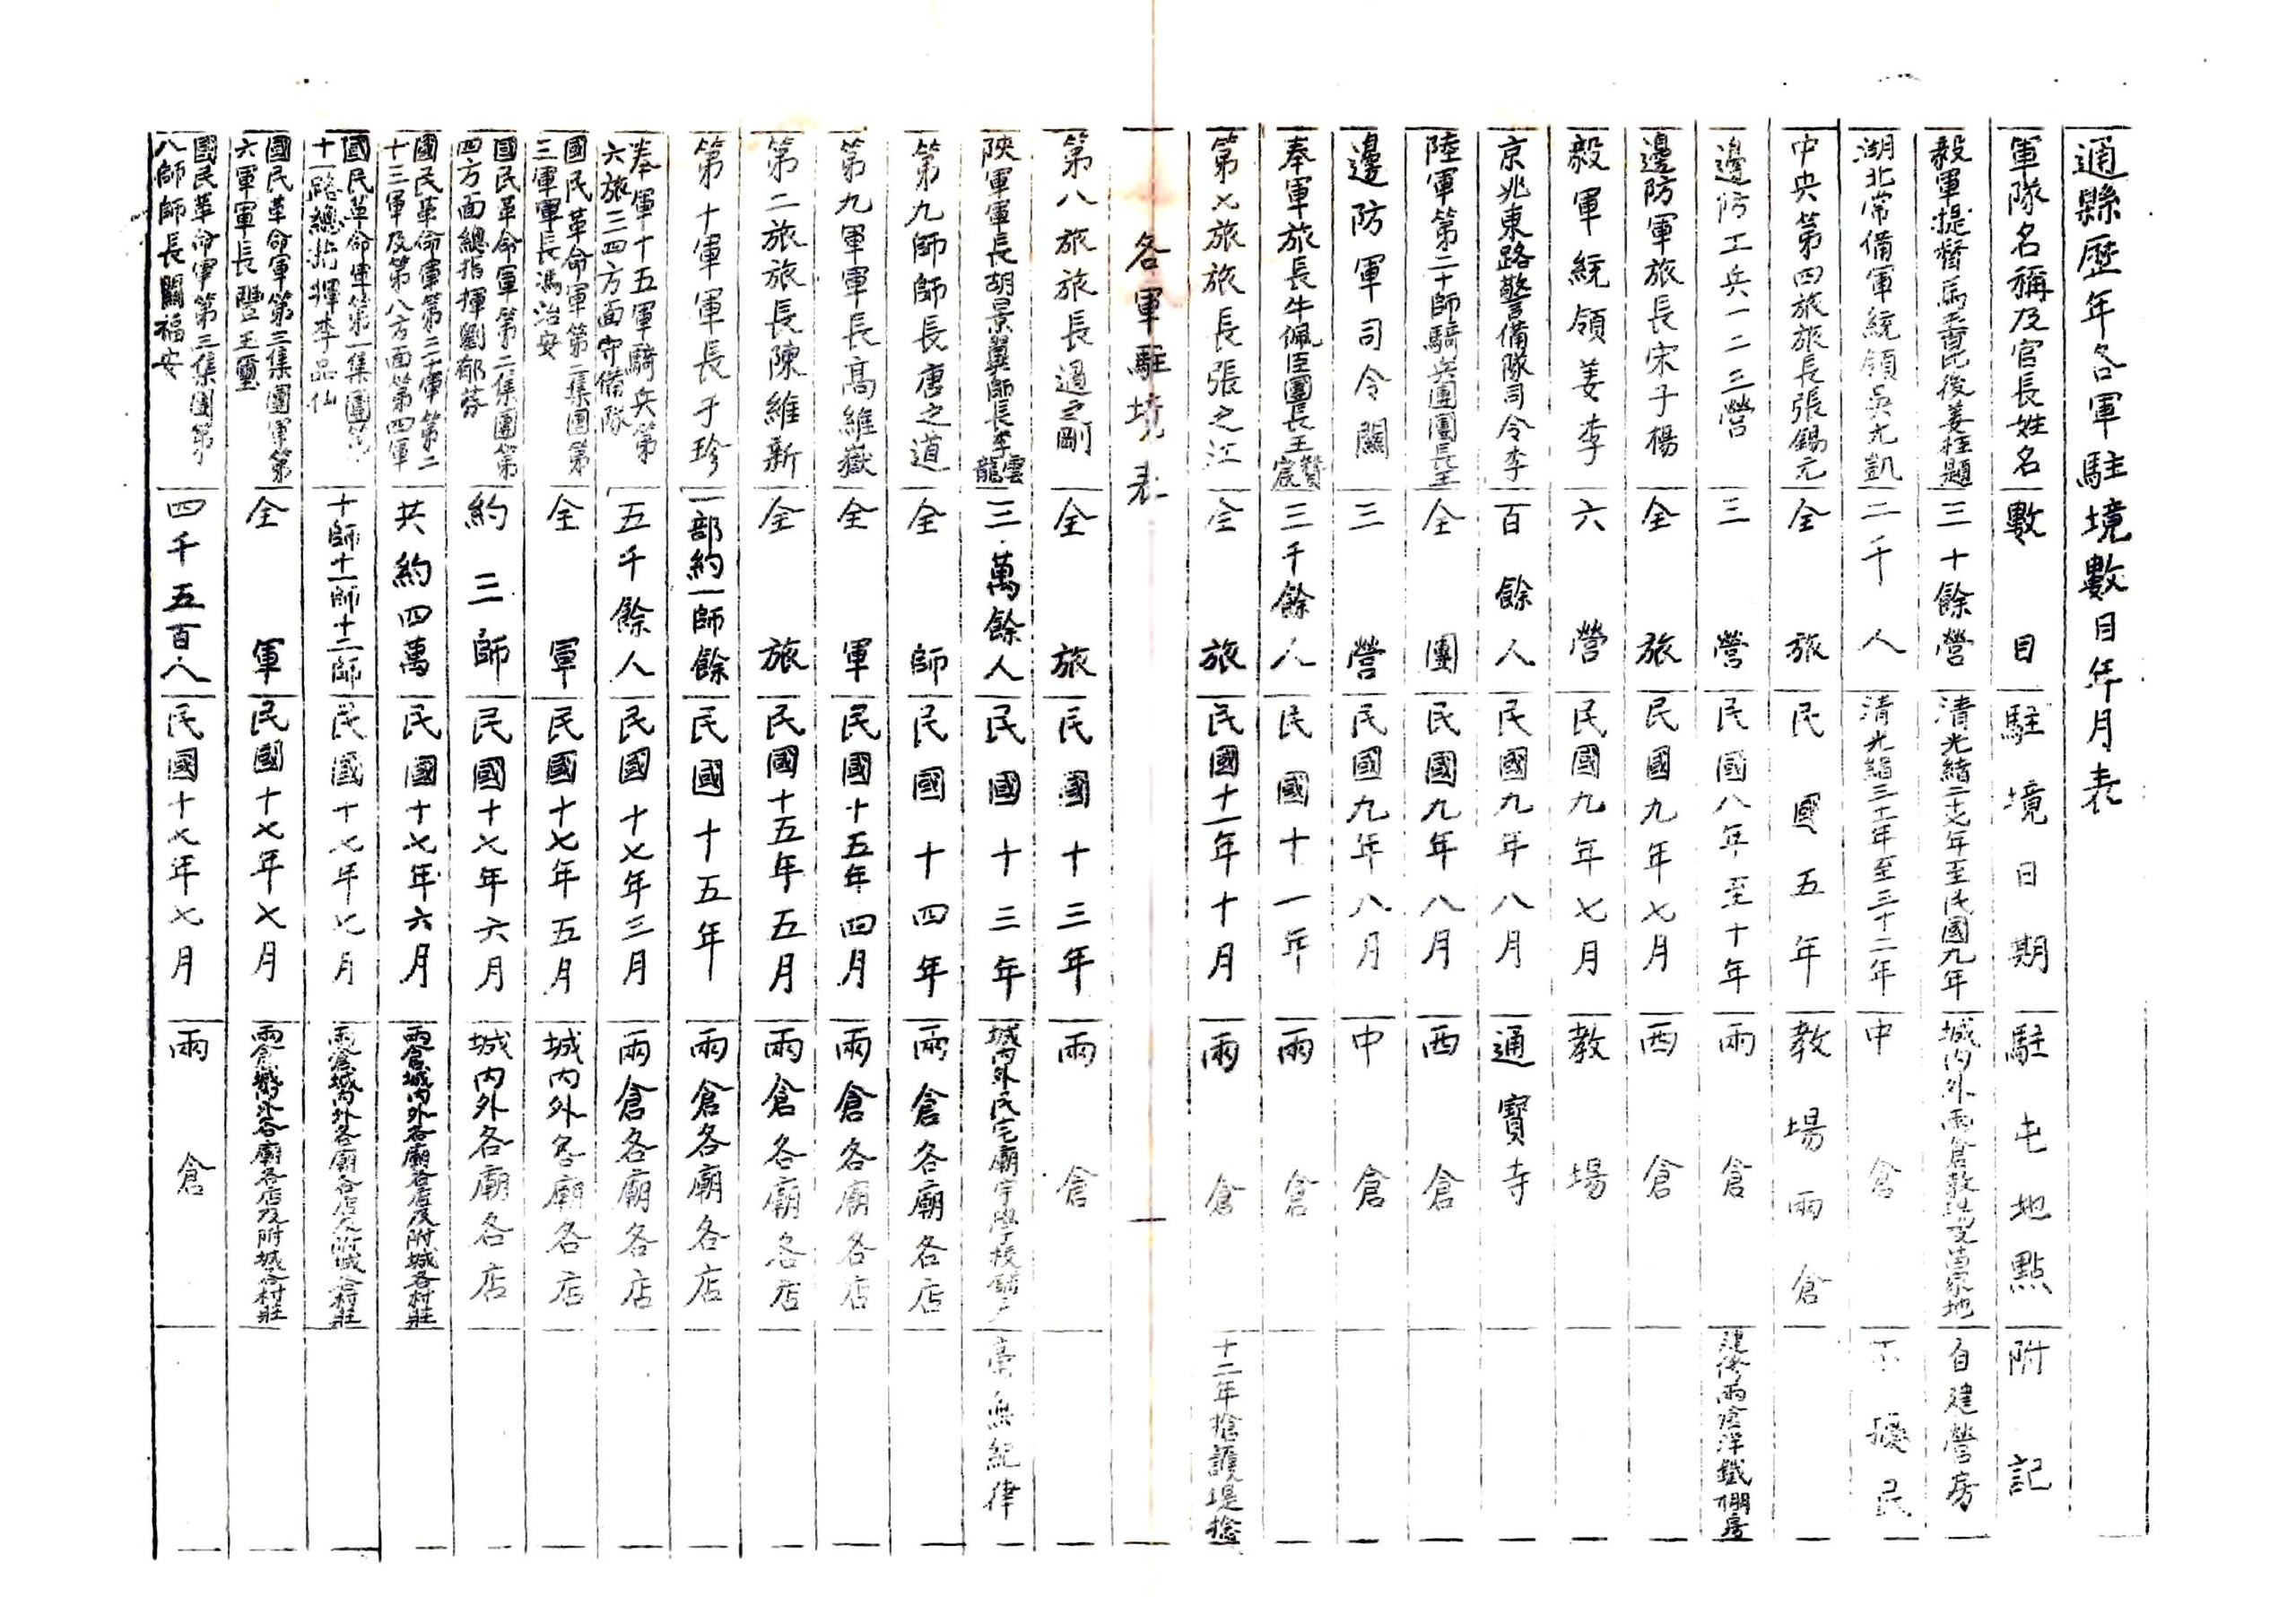 File:通縣編纂省志材料- 民國二十一年(1932).pdf - 维基百科，自由的 